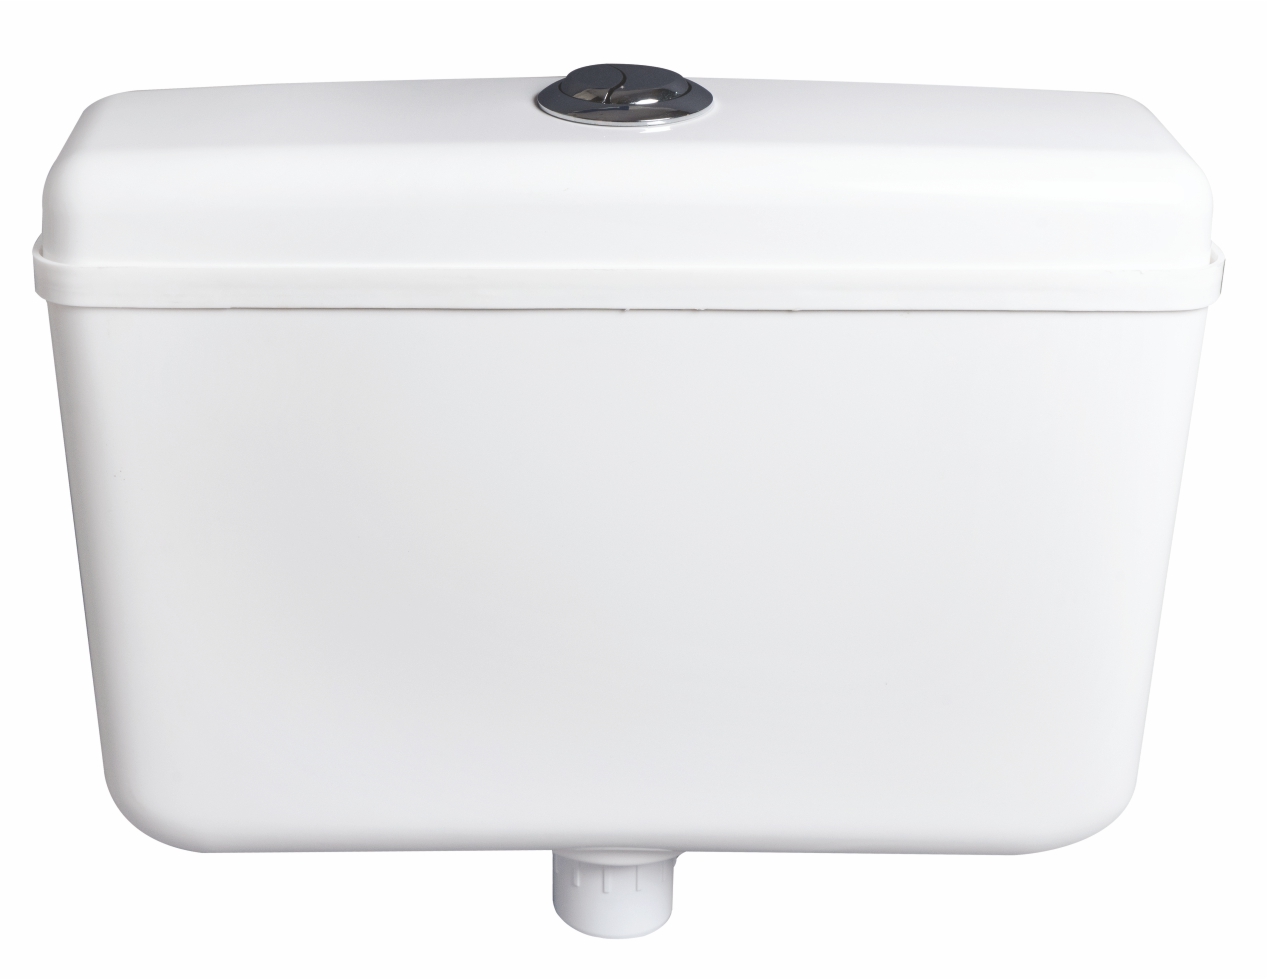 Buy Ultima Dual Flush Tank from Johnson Bathrooms